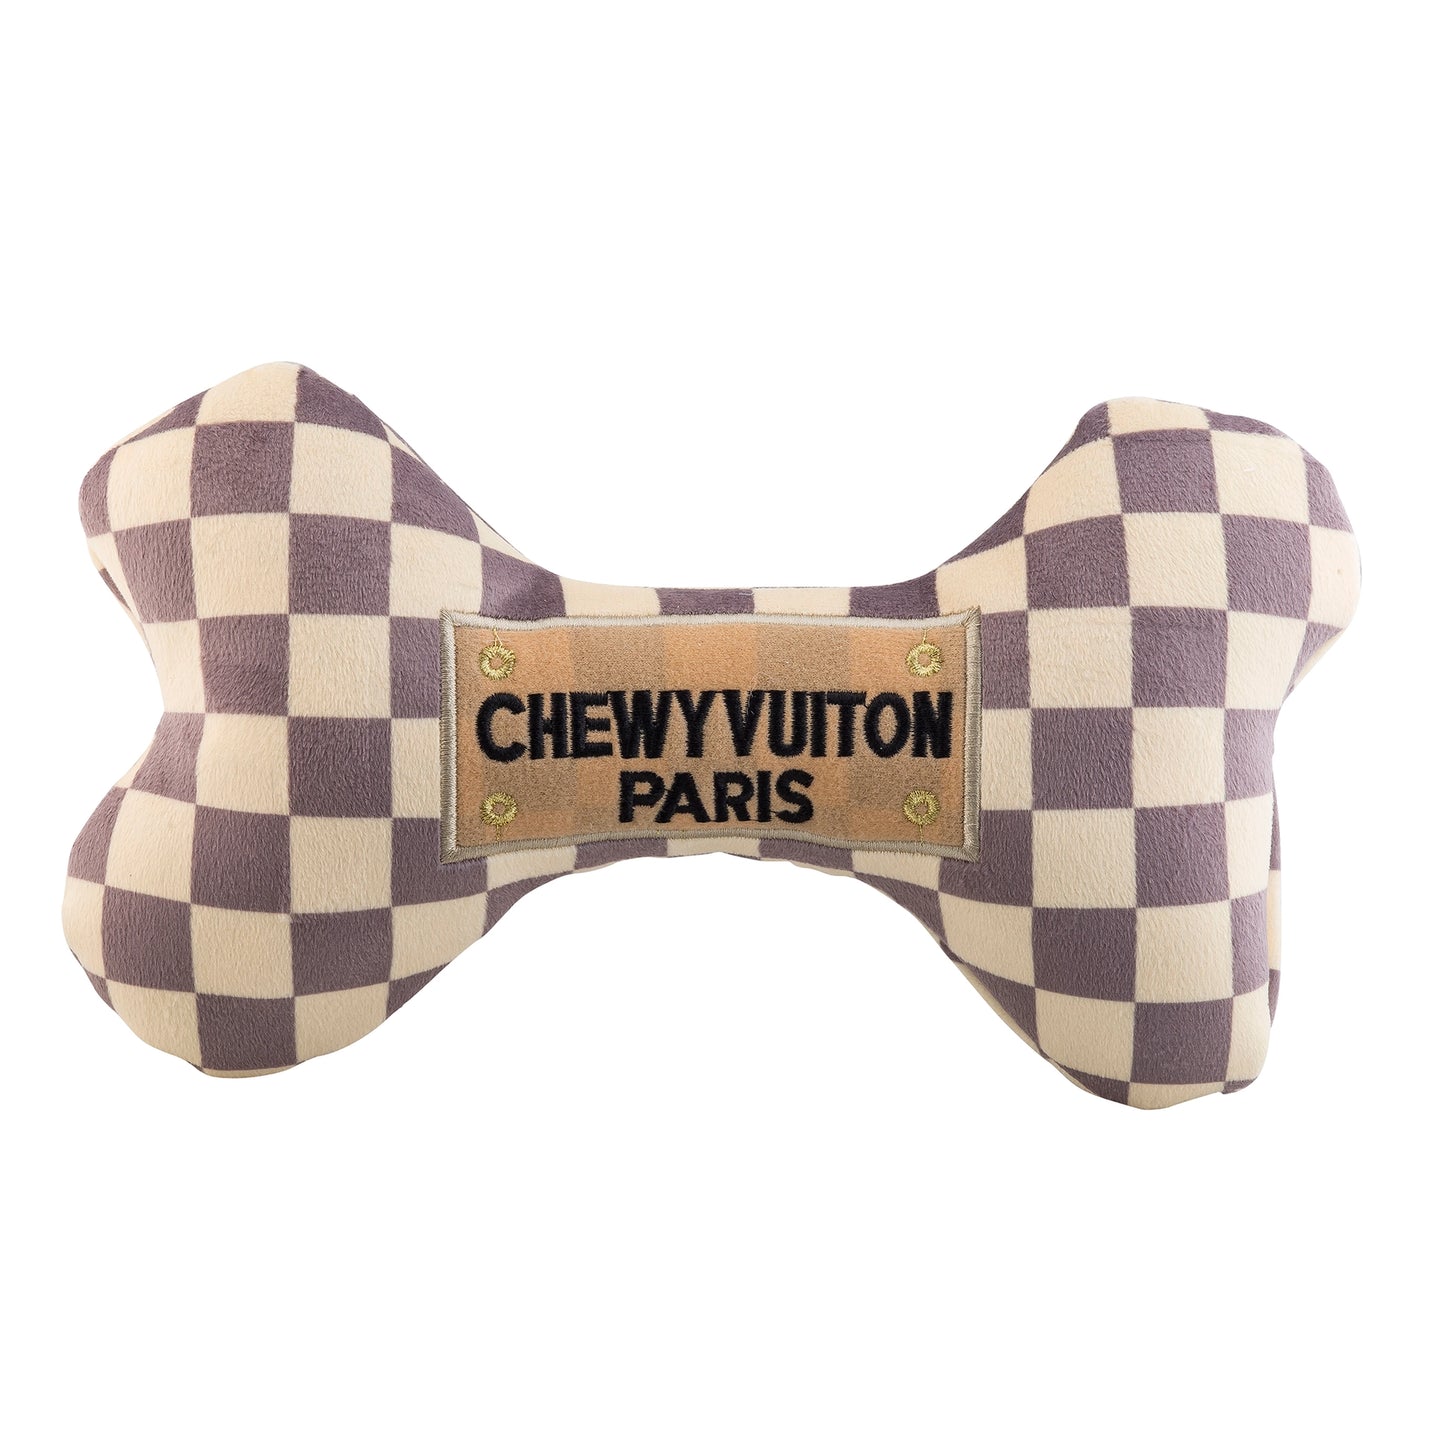 Haute Dog Chewy Vuiton Dog Toy XL